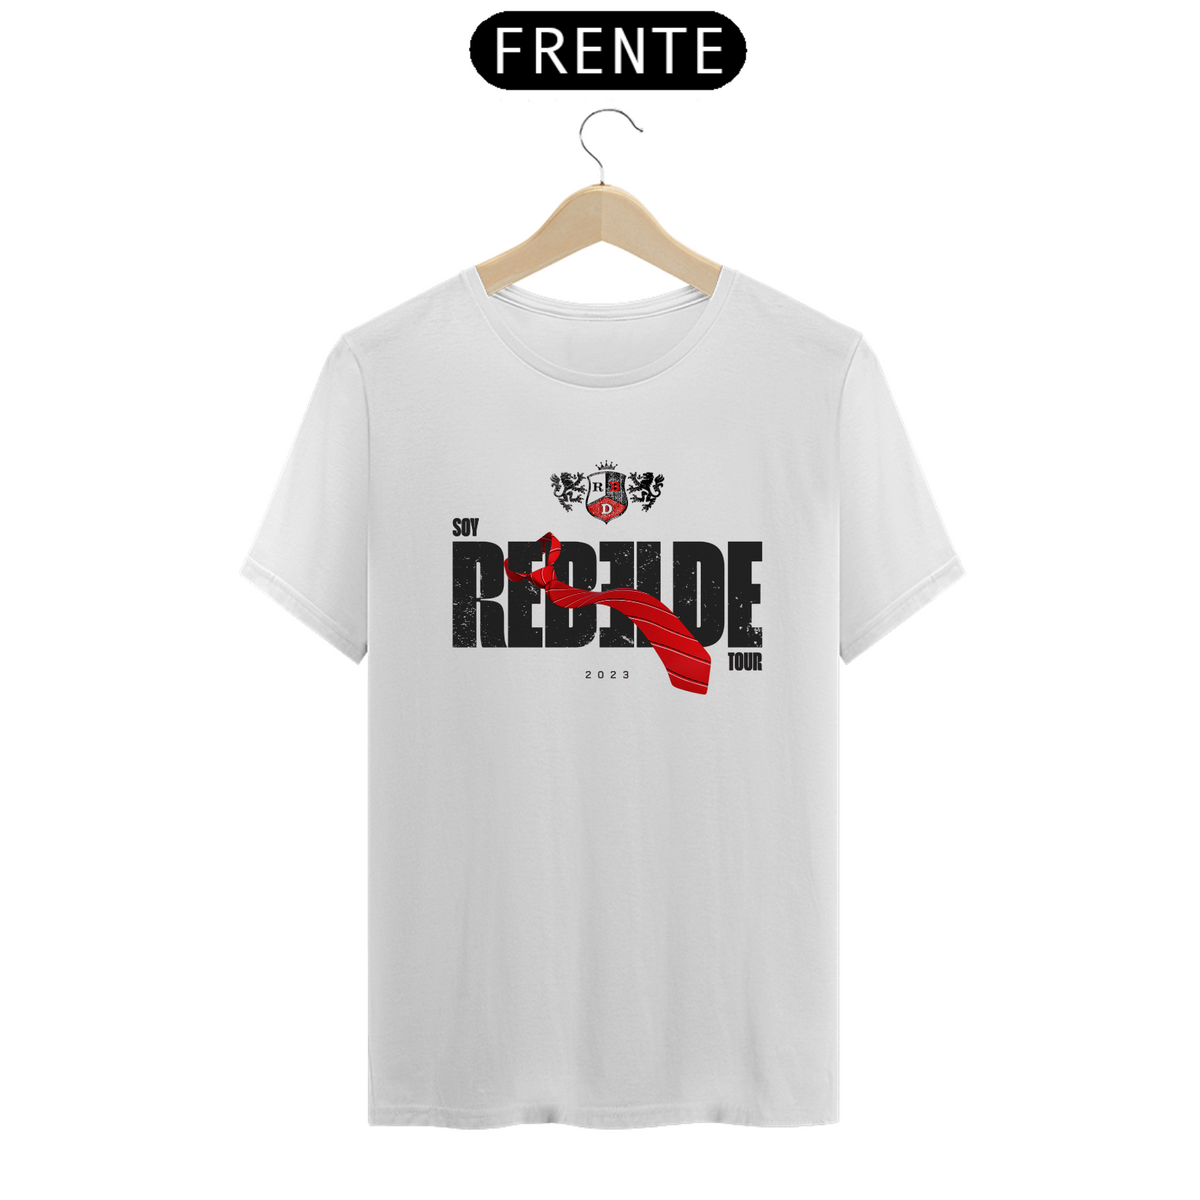 Nome do produto: Camiseta Unissex - Soy Rebelde Tour 2023